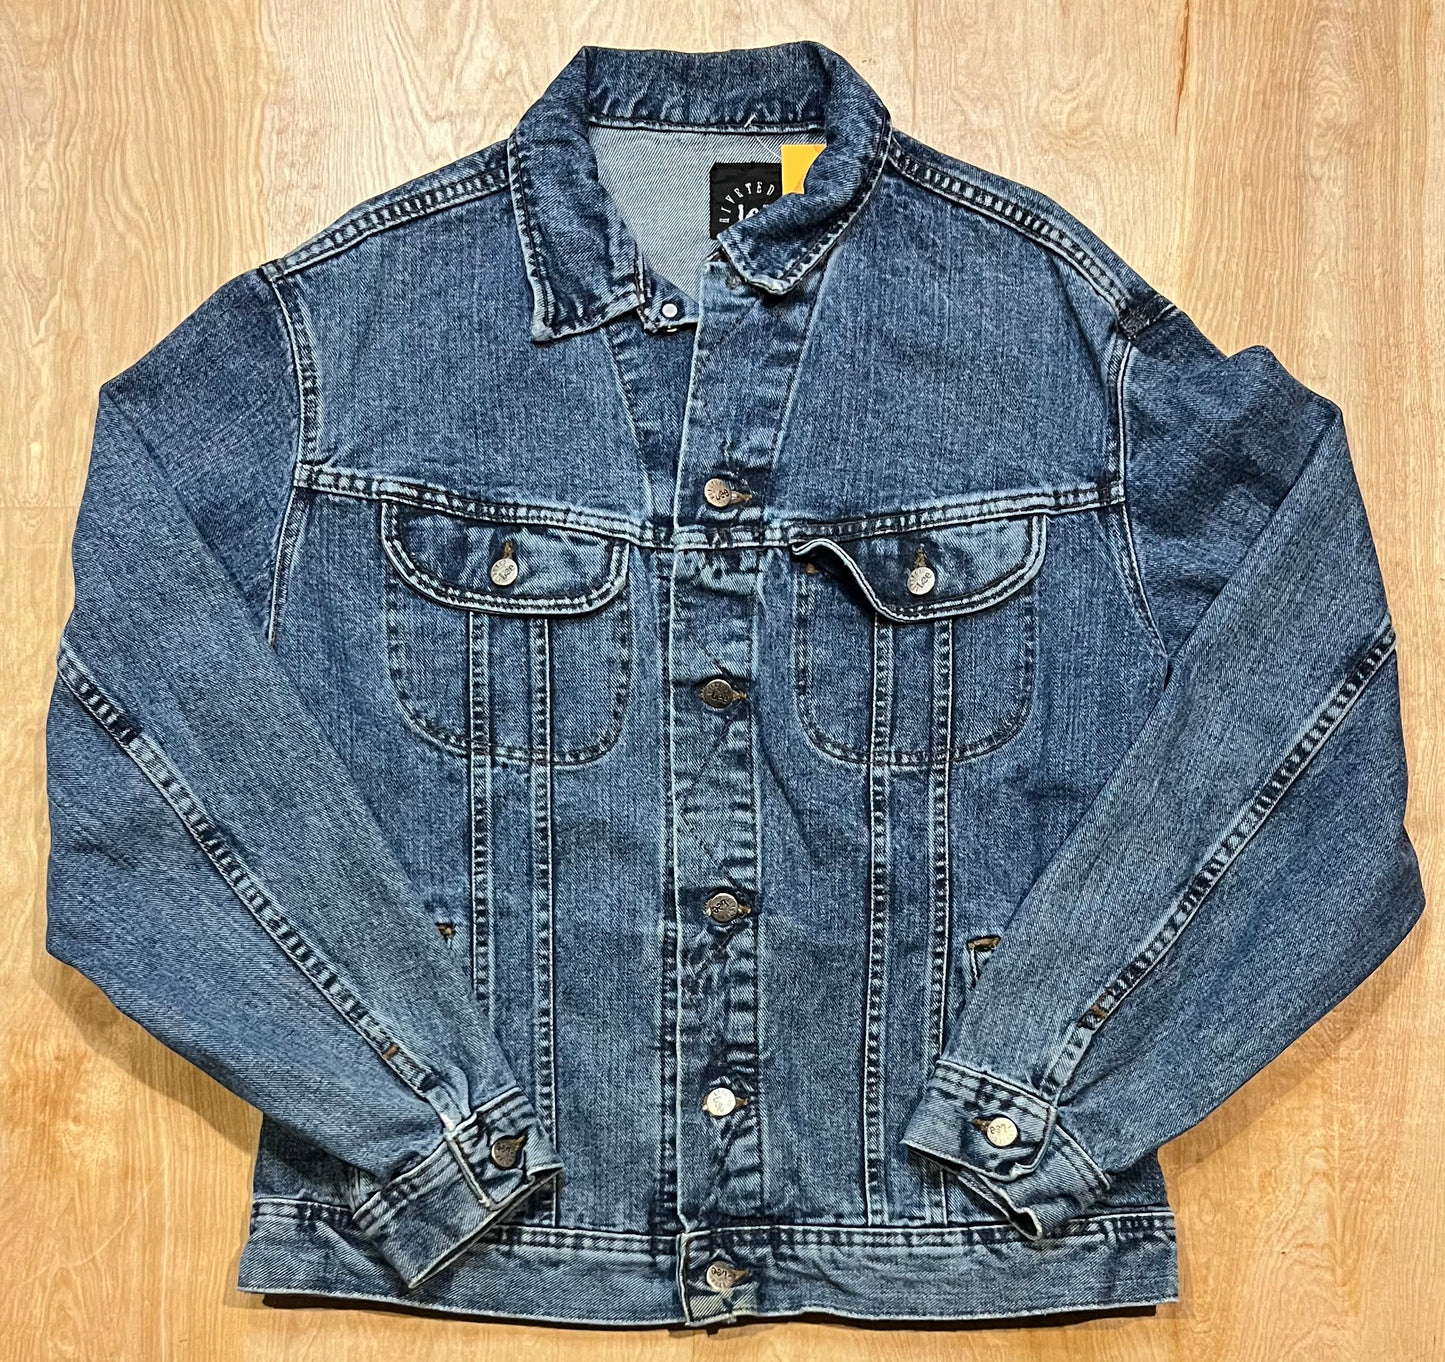 Vintage Lee Riveted Denim Jacket